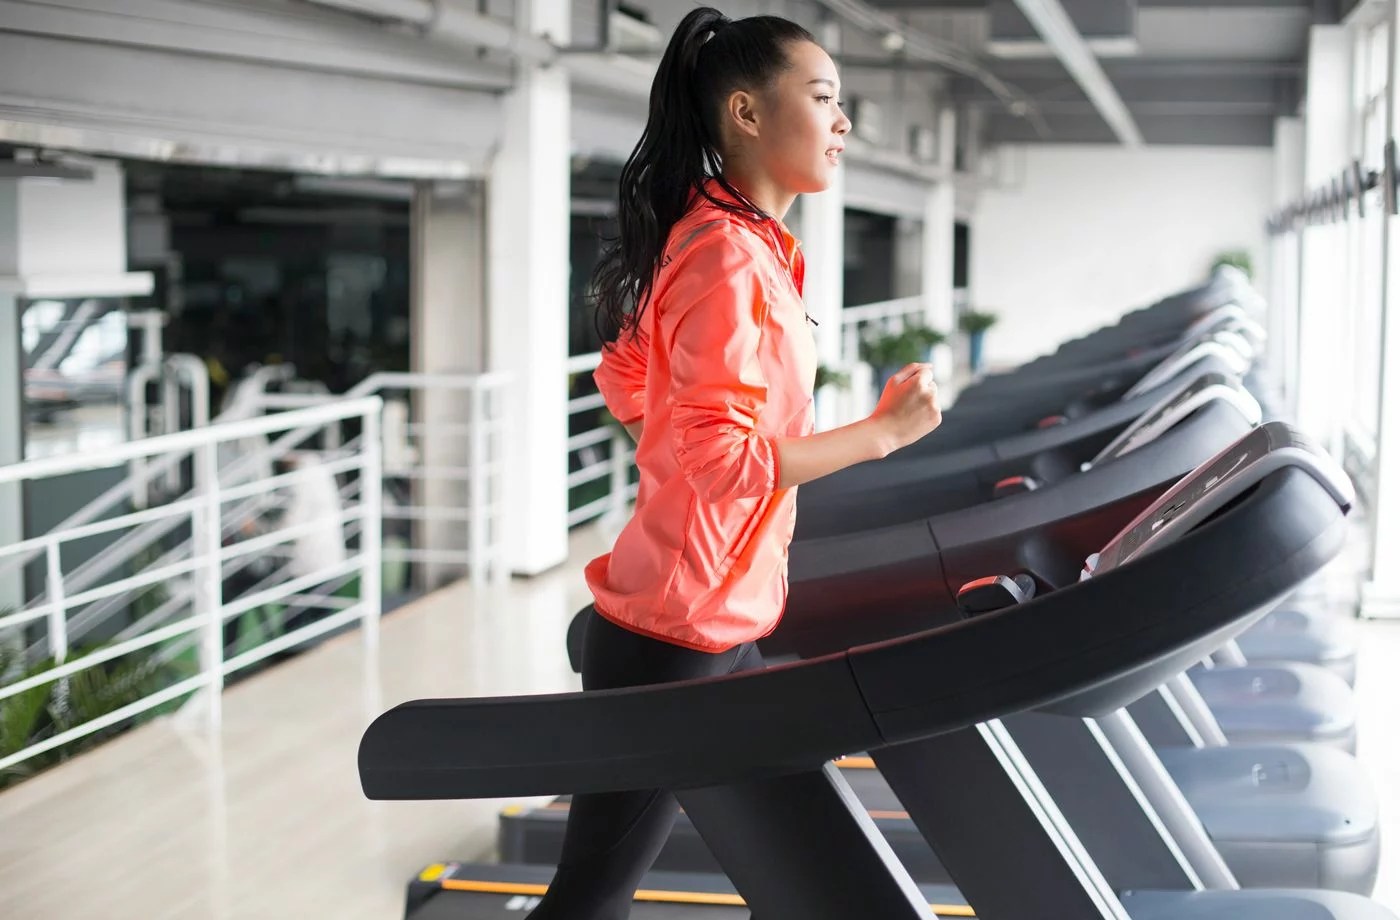 Treadmill workout trend